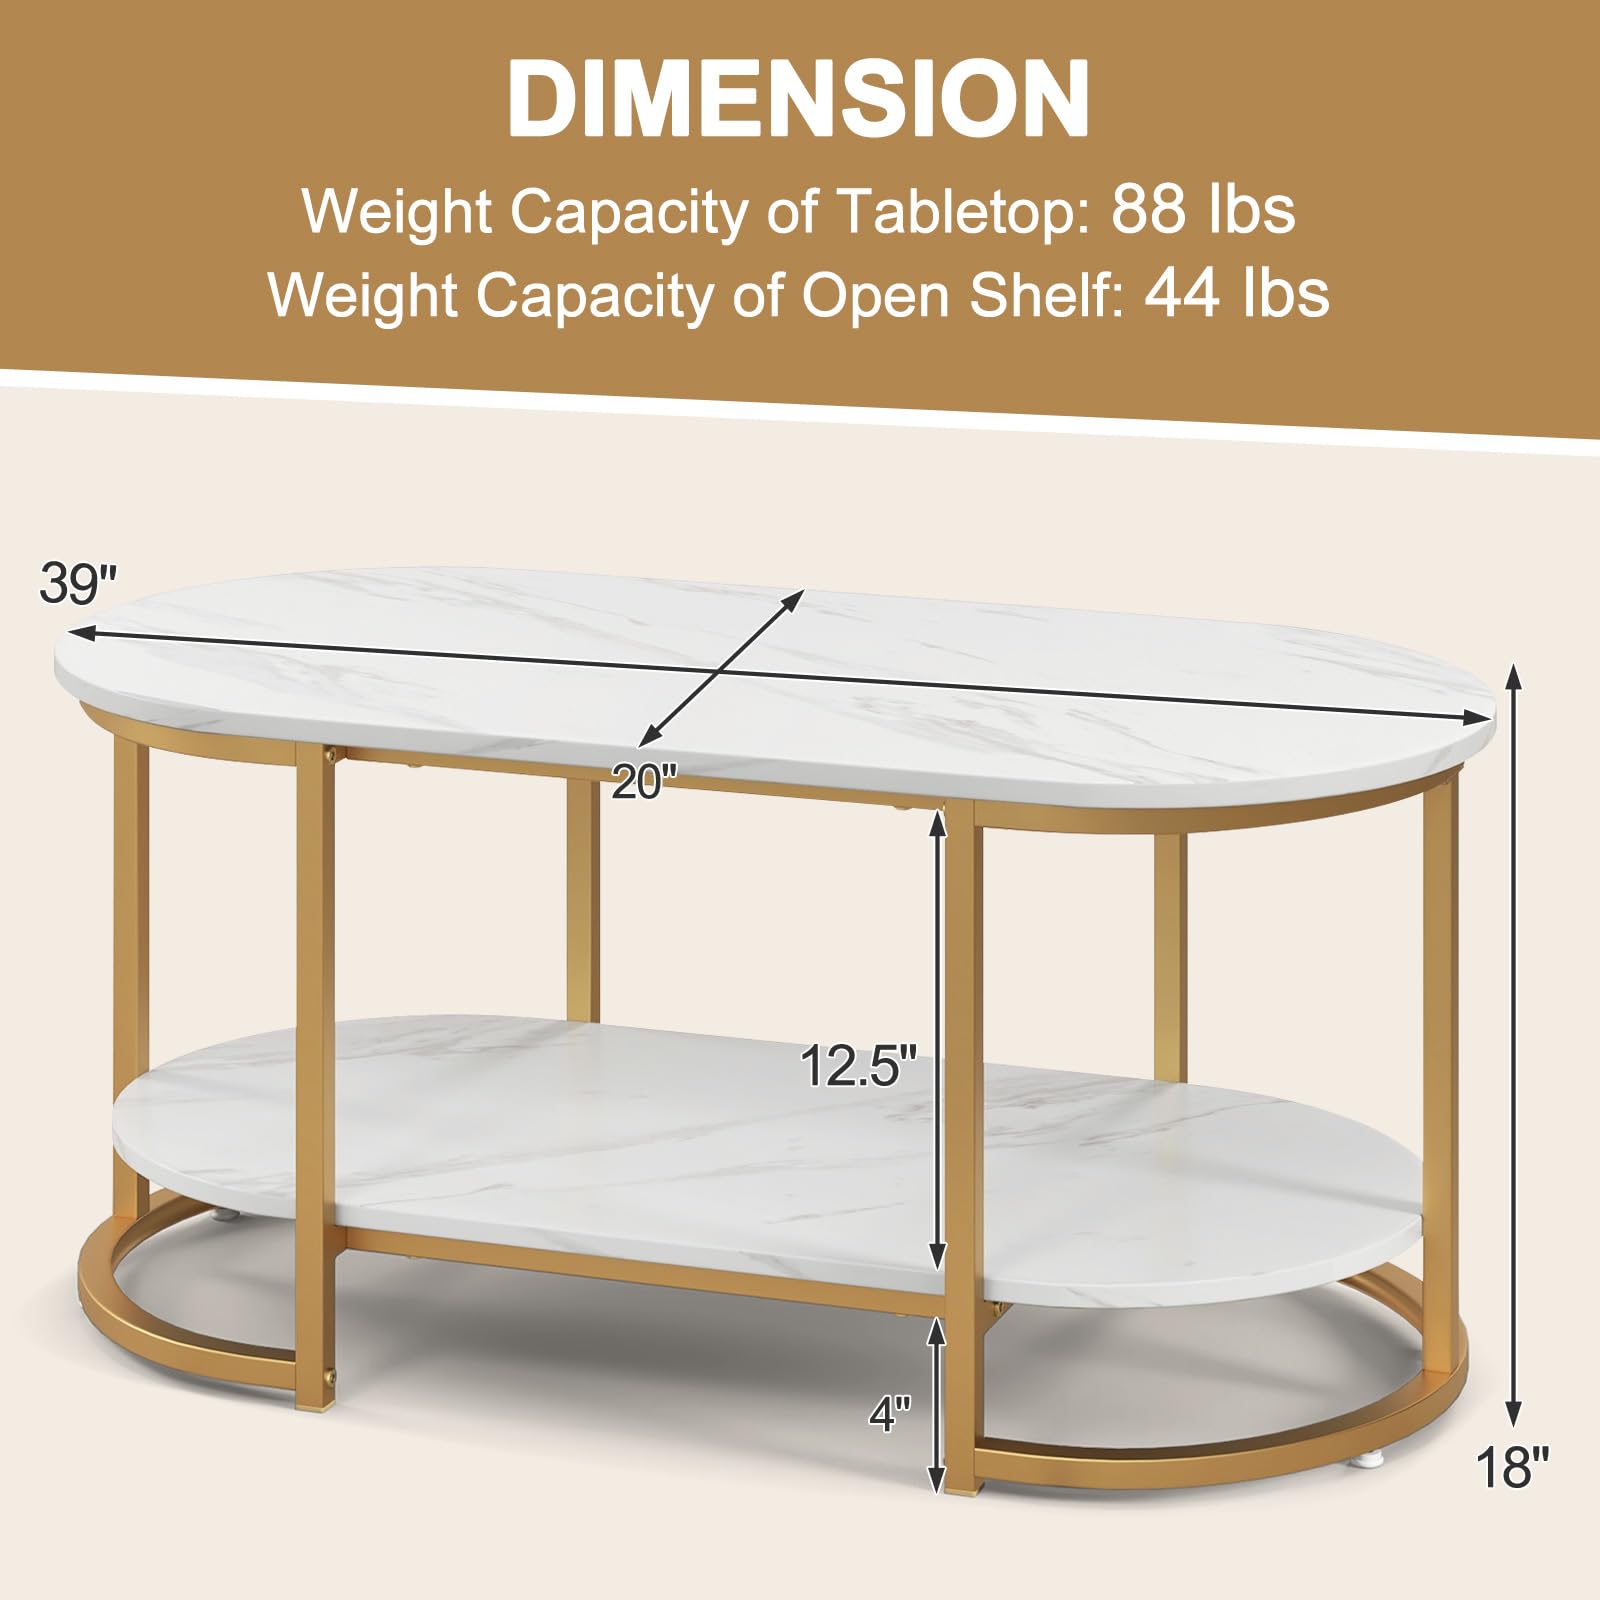 Giantex White Marble Coffee Table - Modern 2-Tier Center Table w/Open Storage Shelf